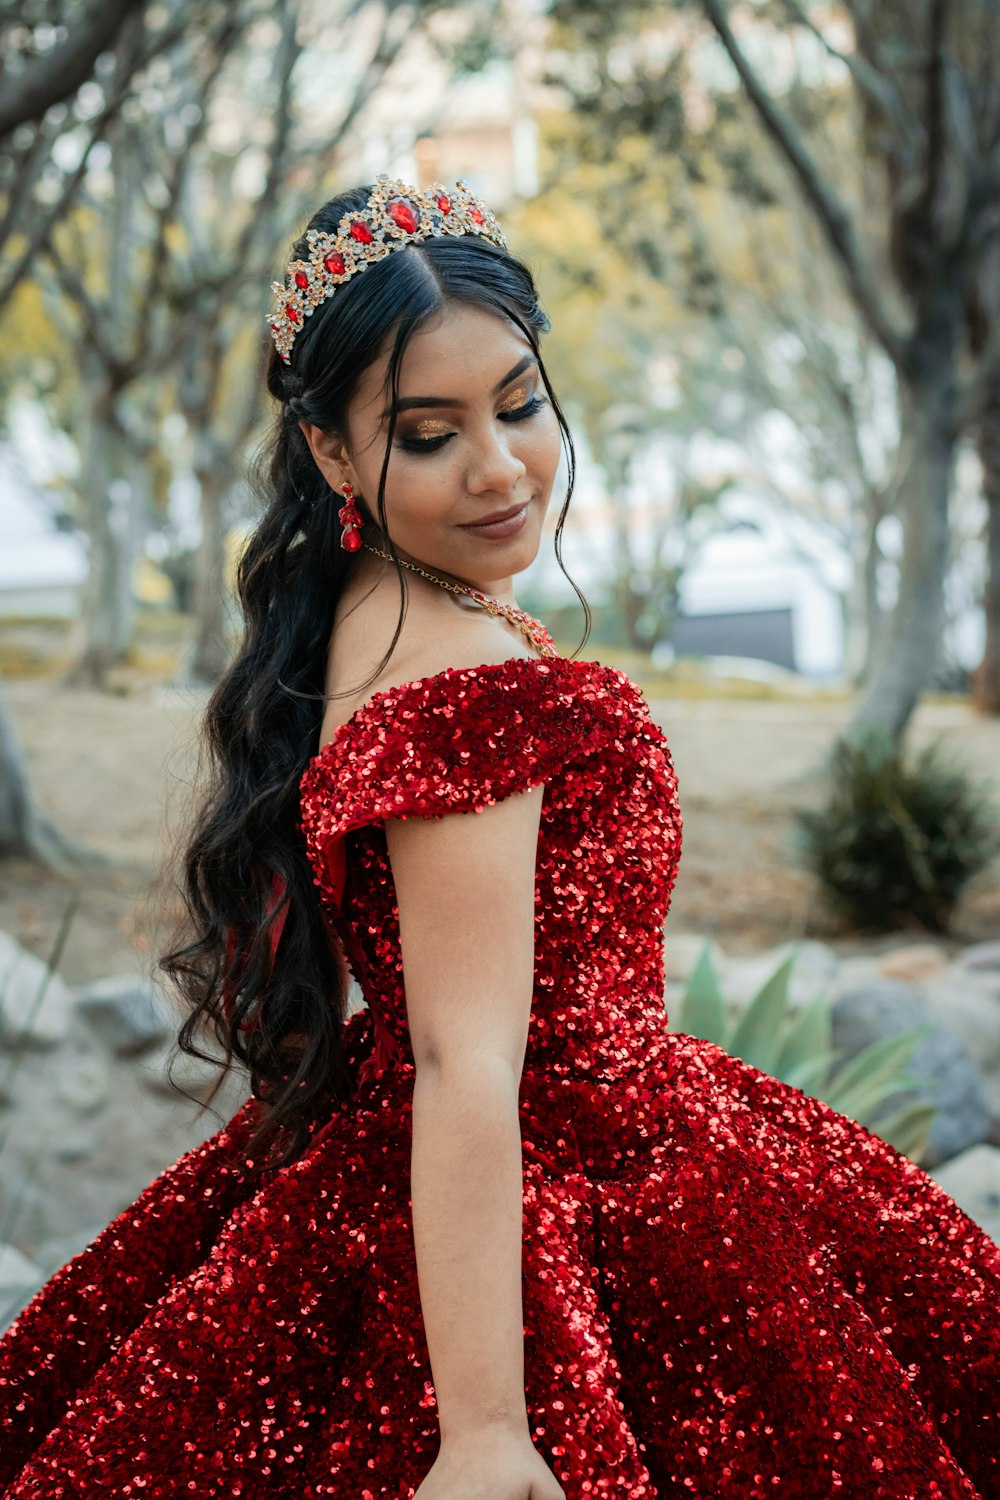 A woman wearing a red dress and a tiara photo – Free Dress Image on Unsplash